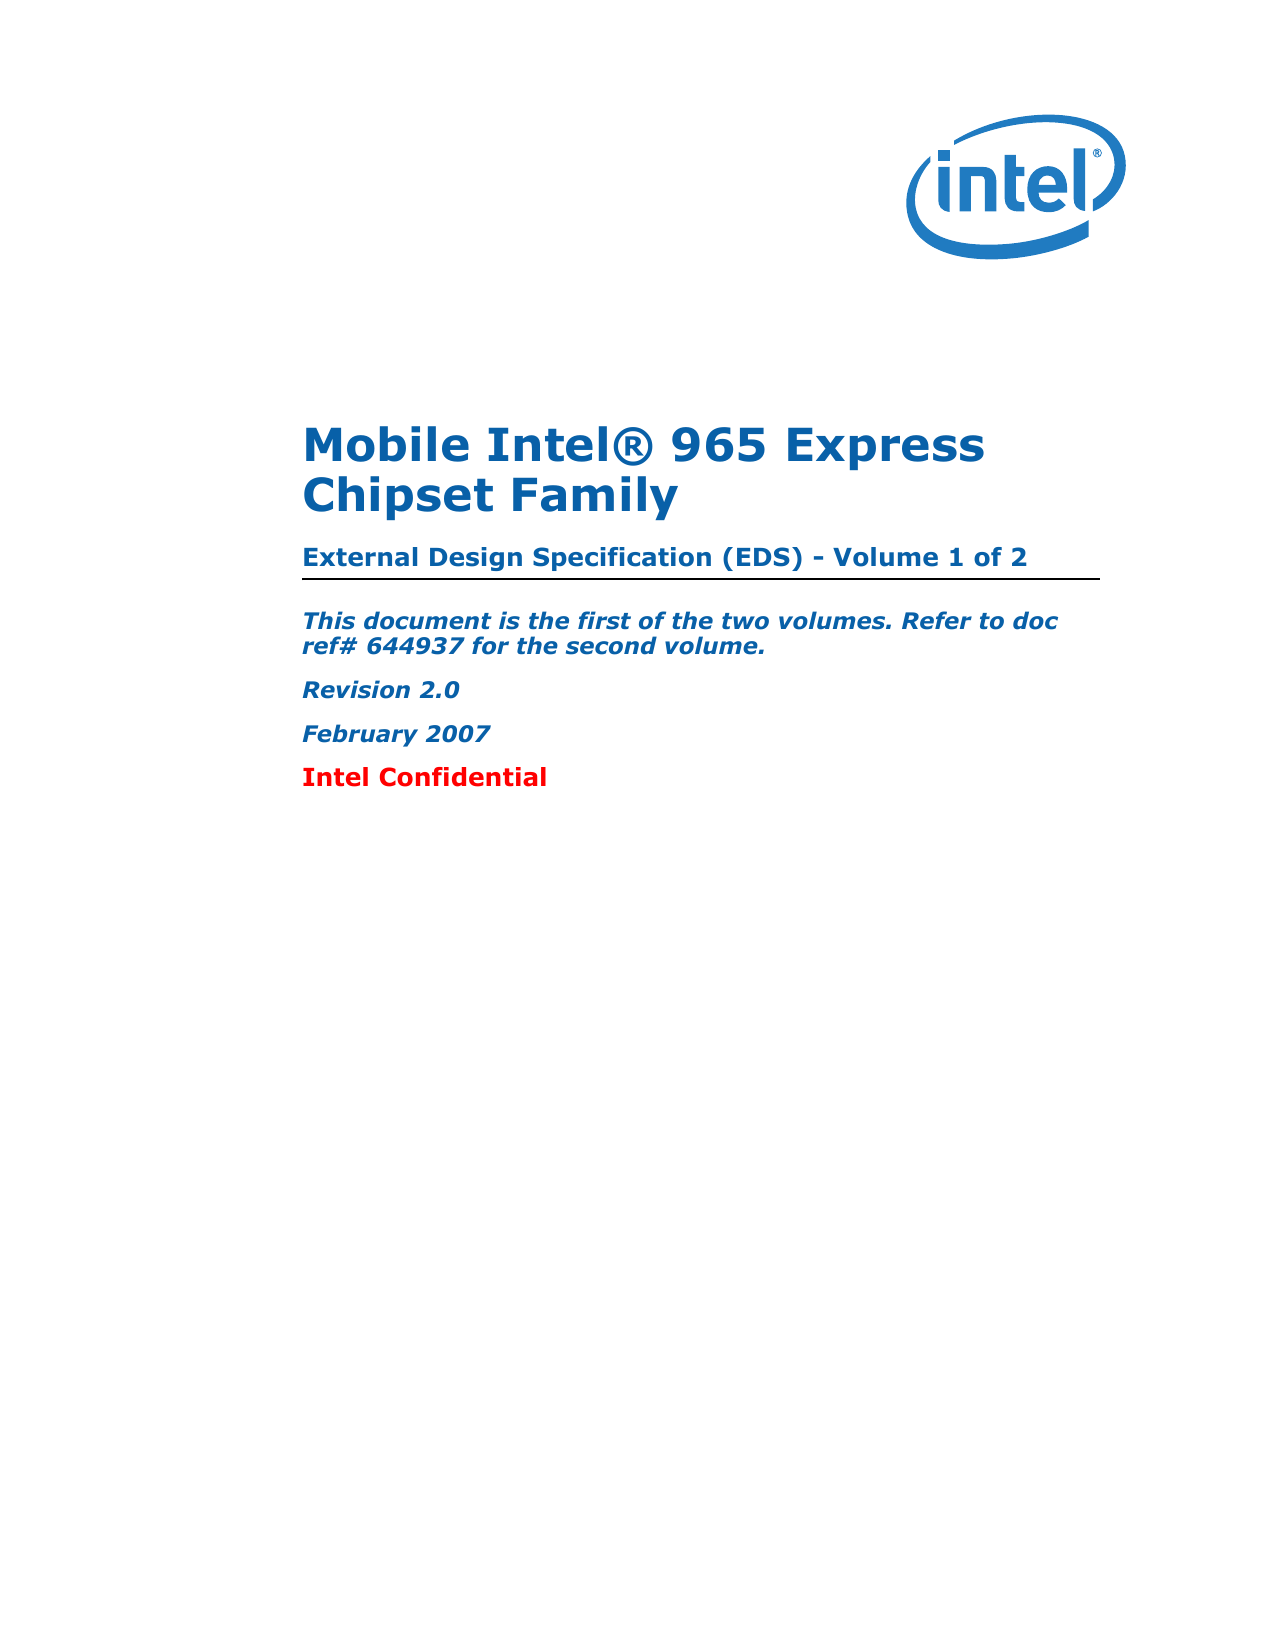 mobile intel 965 express chipset family driver windows 7 64 bit